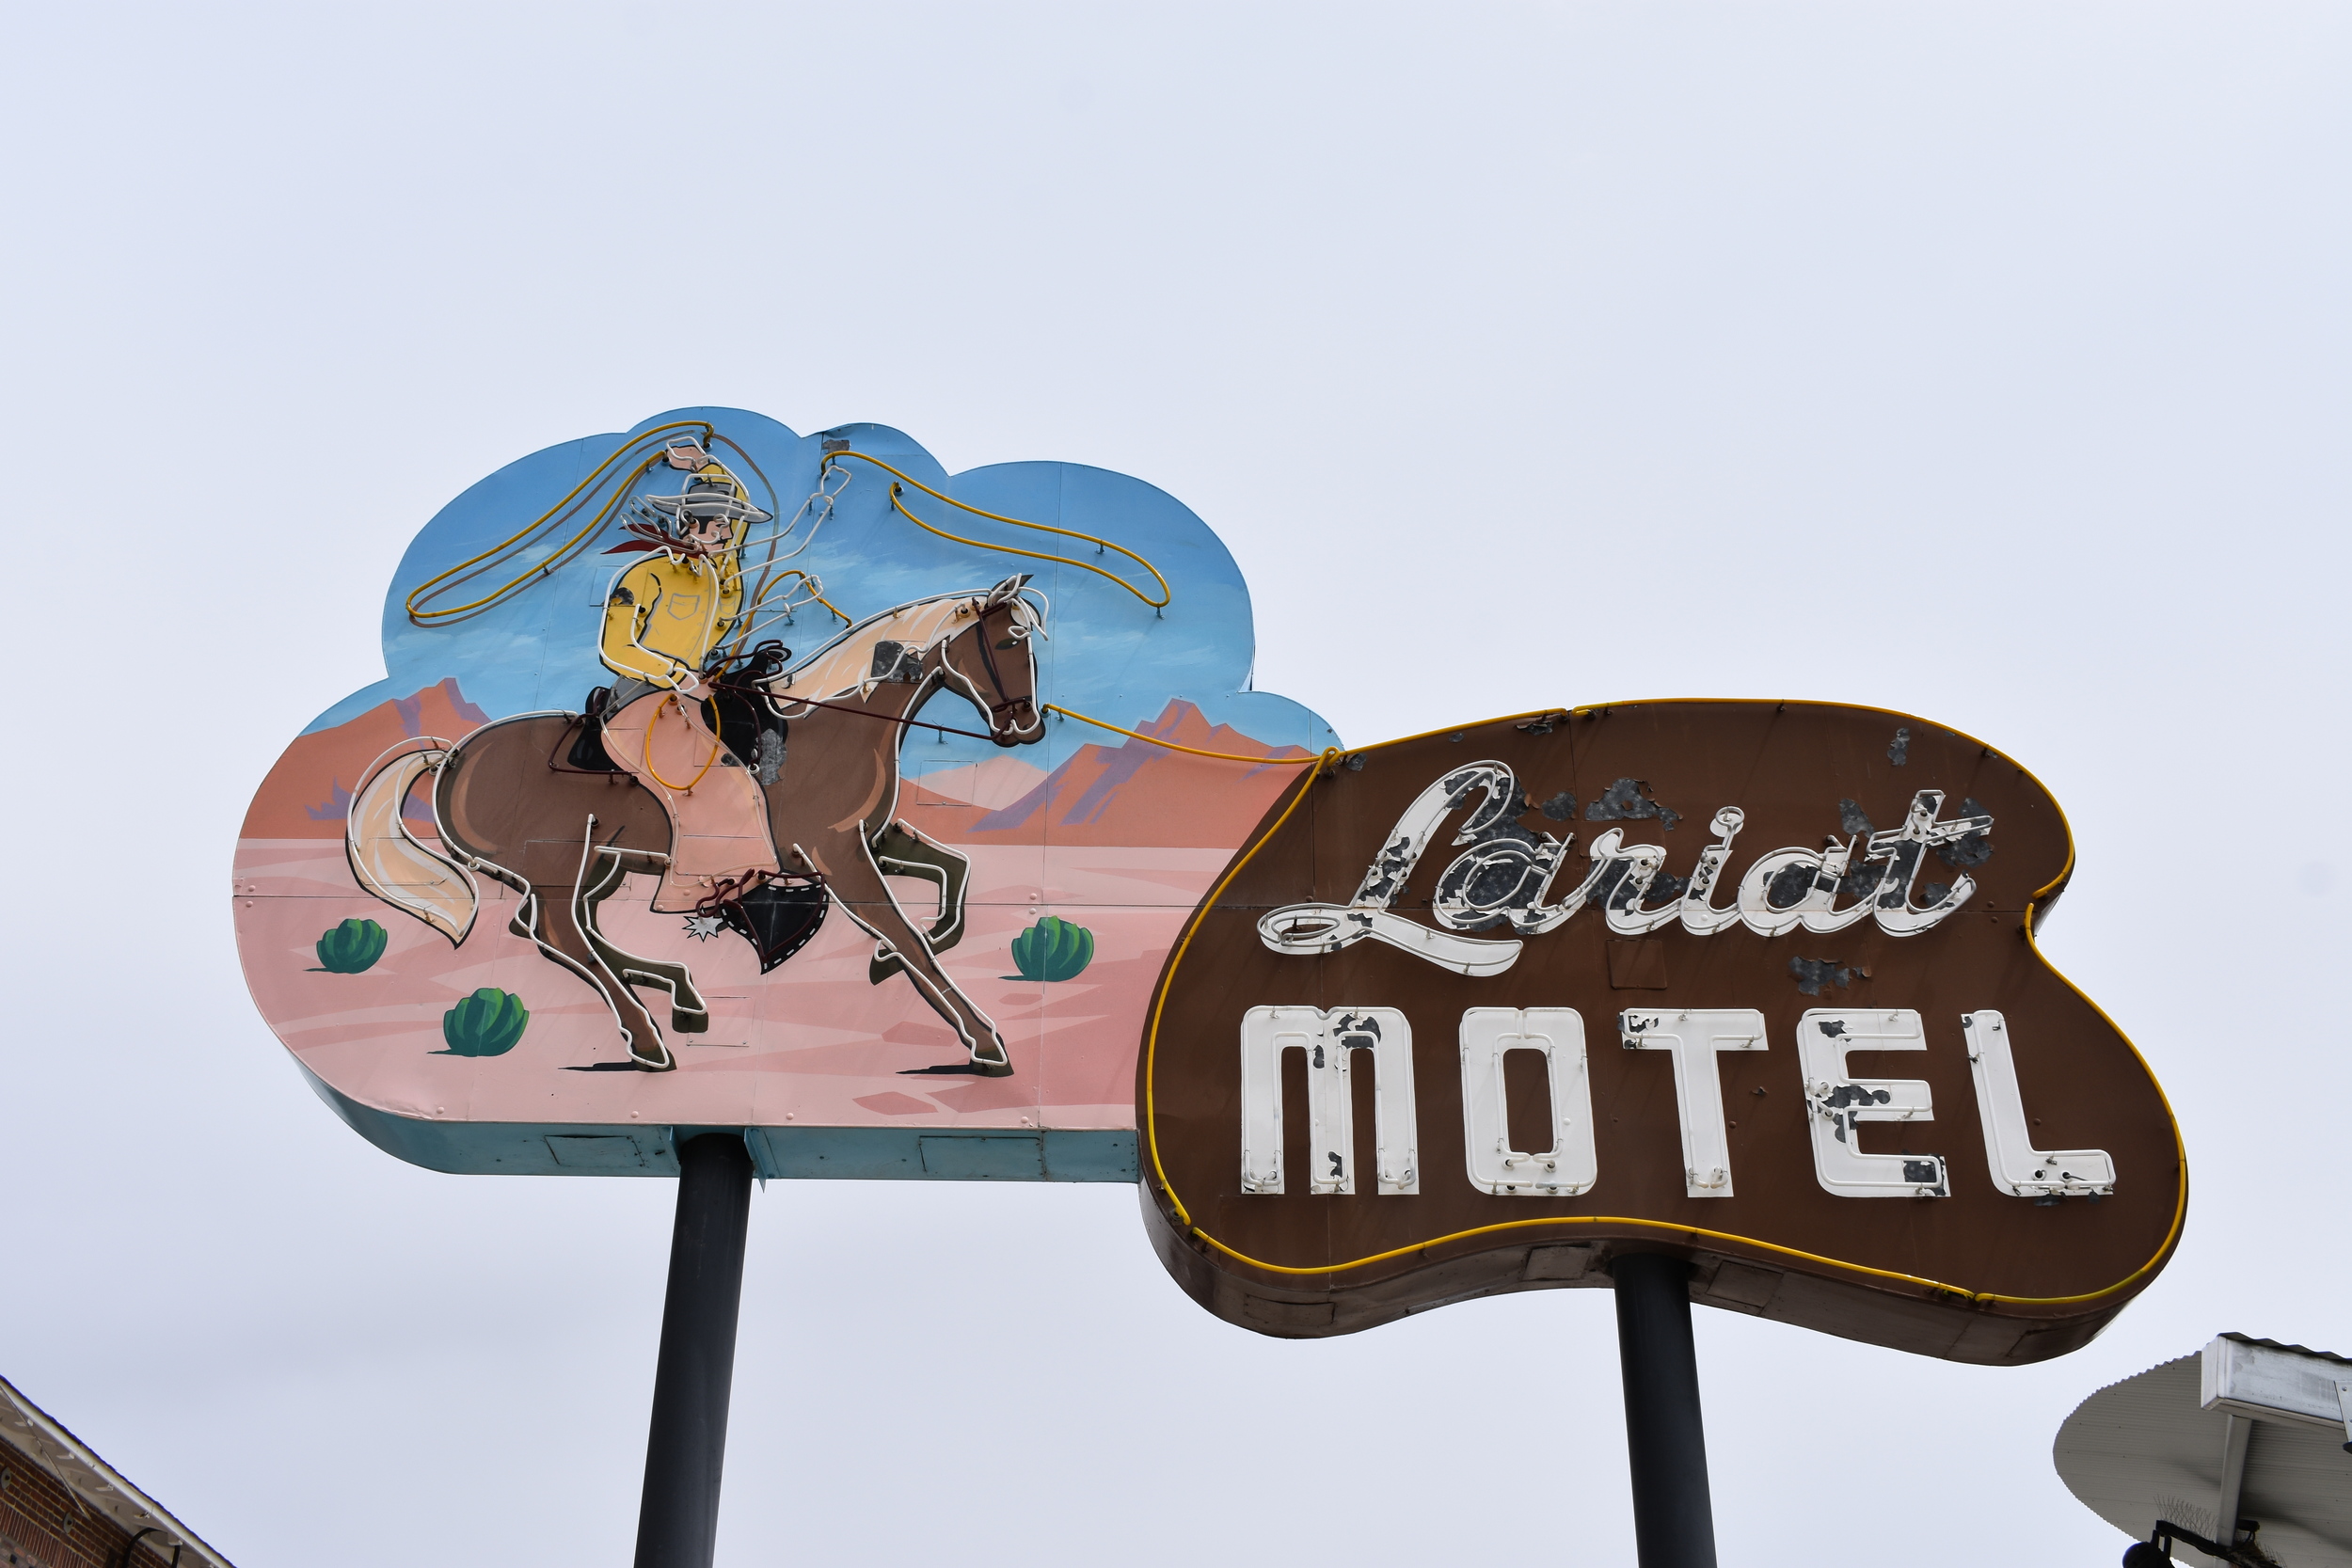 Lariat Motel mounted signs, Fallon, Nevada